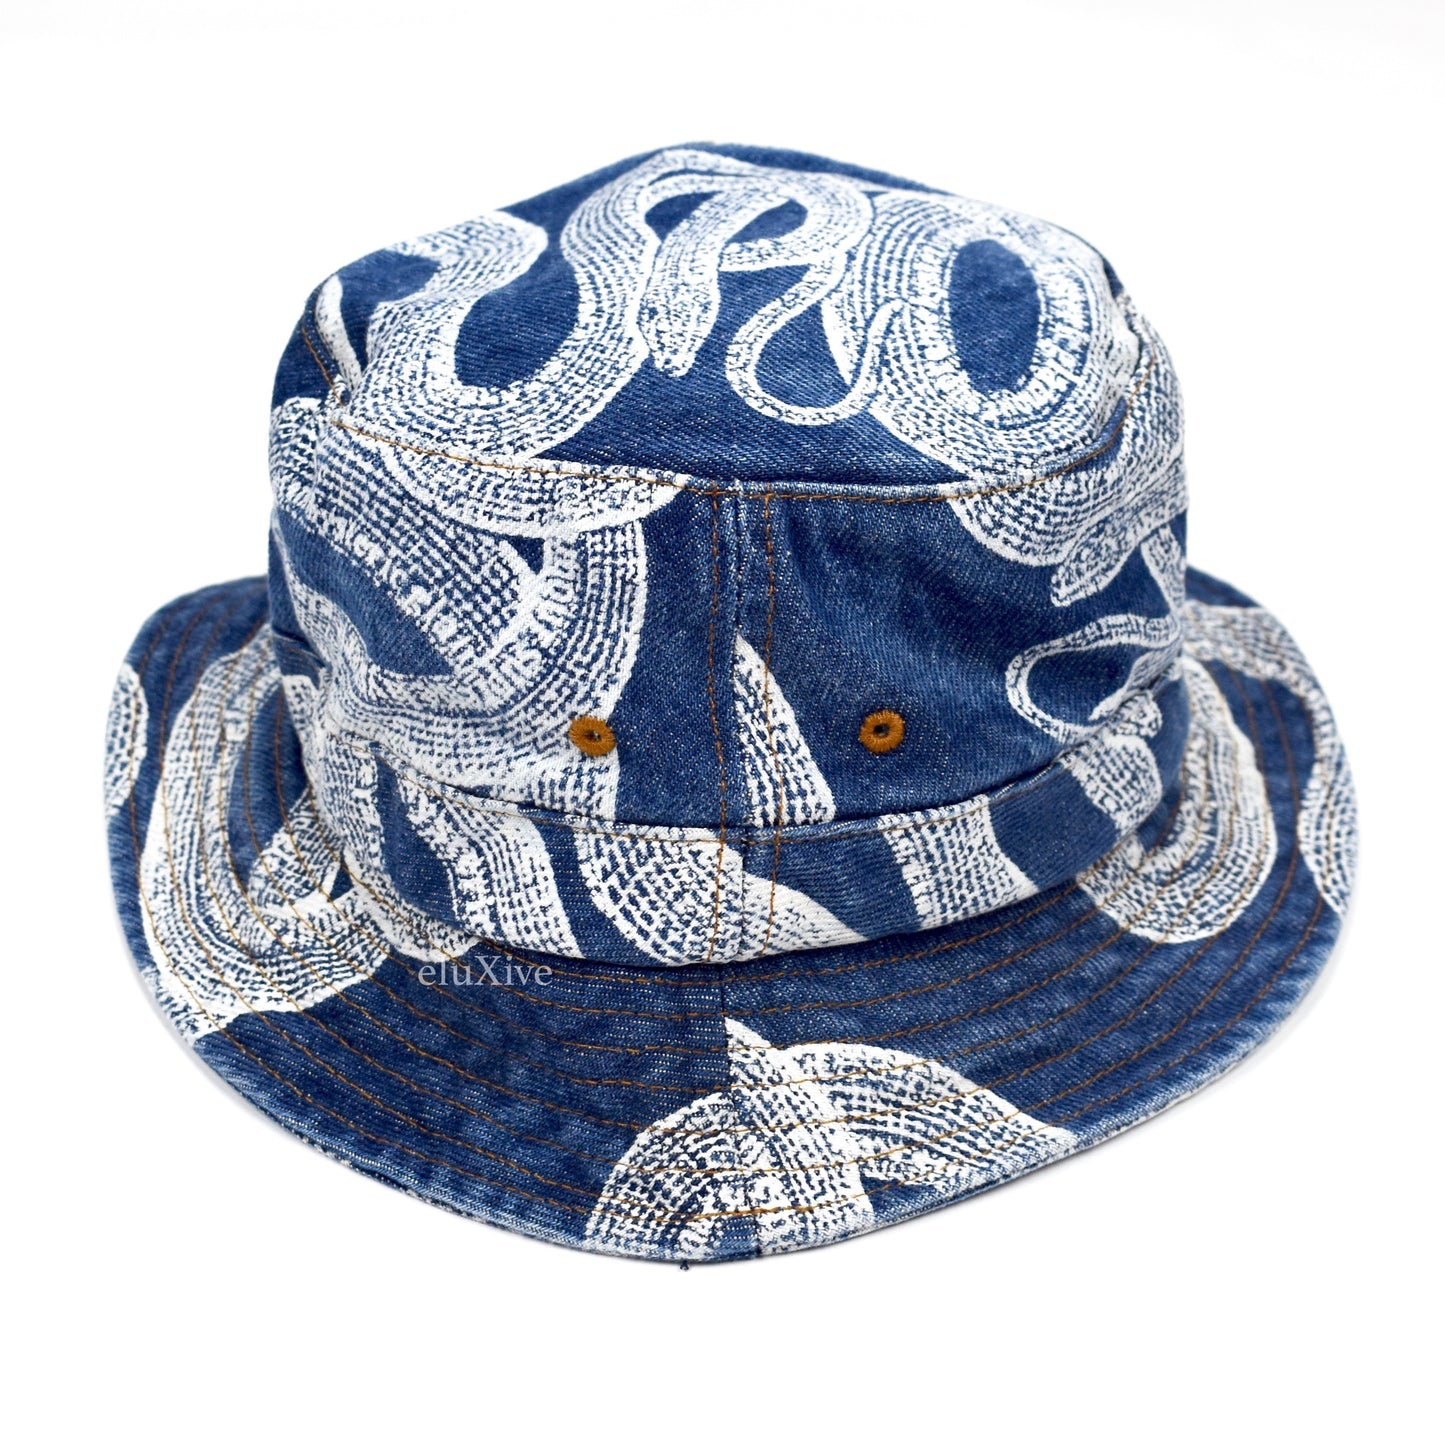 Supreme x Hysteric Glamour - Snake Print Denim Bucket Hat